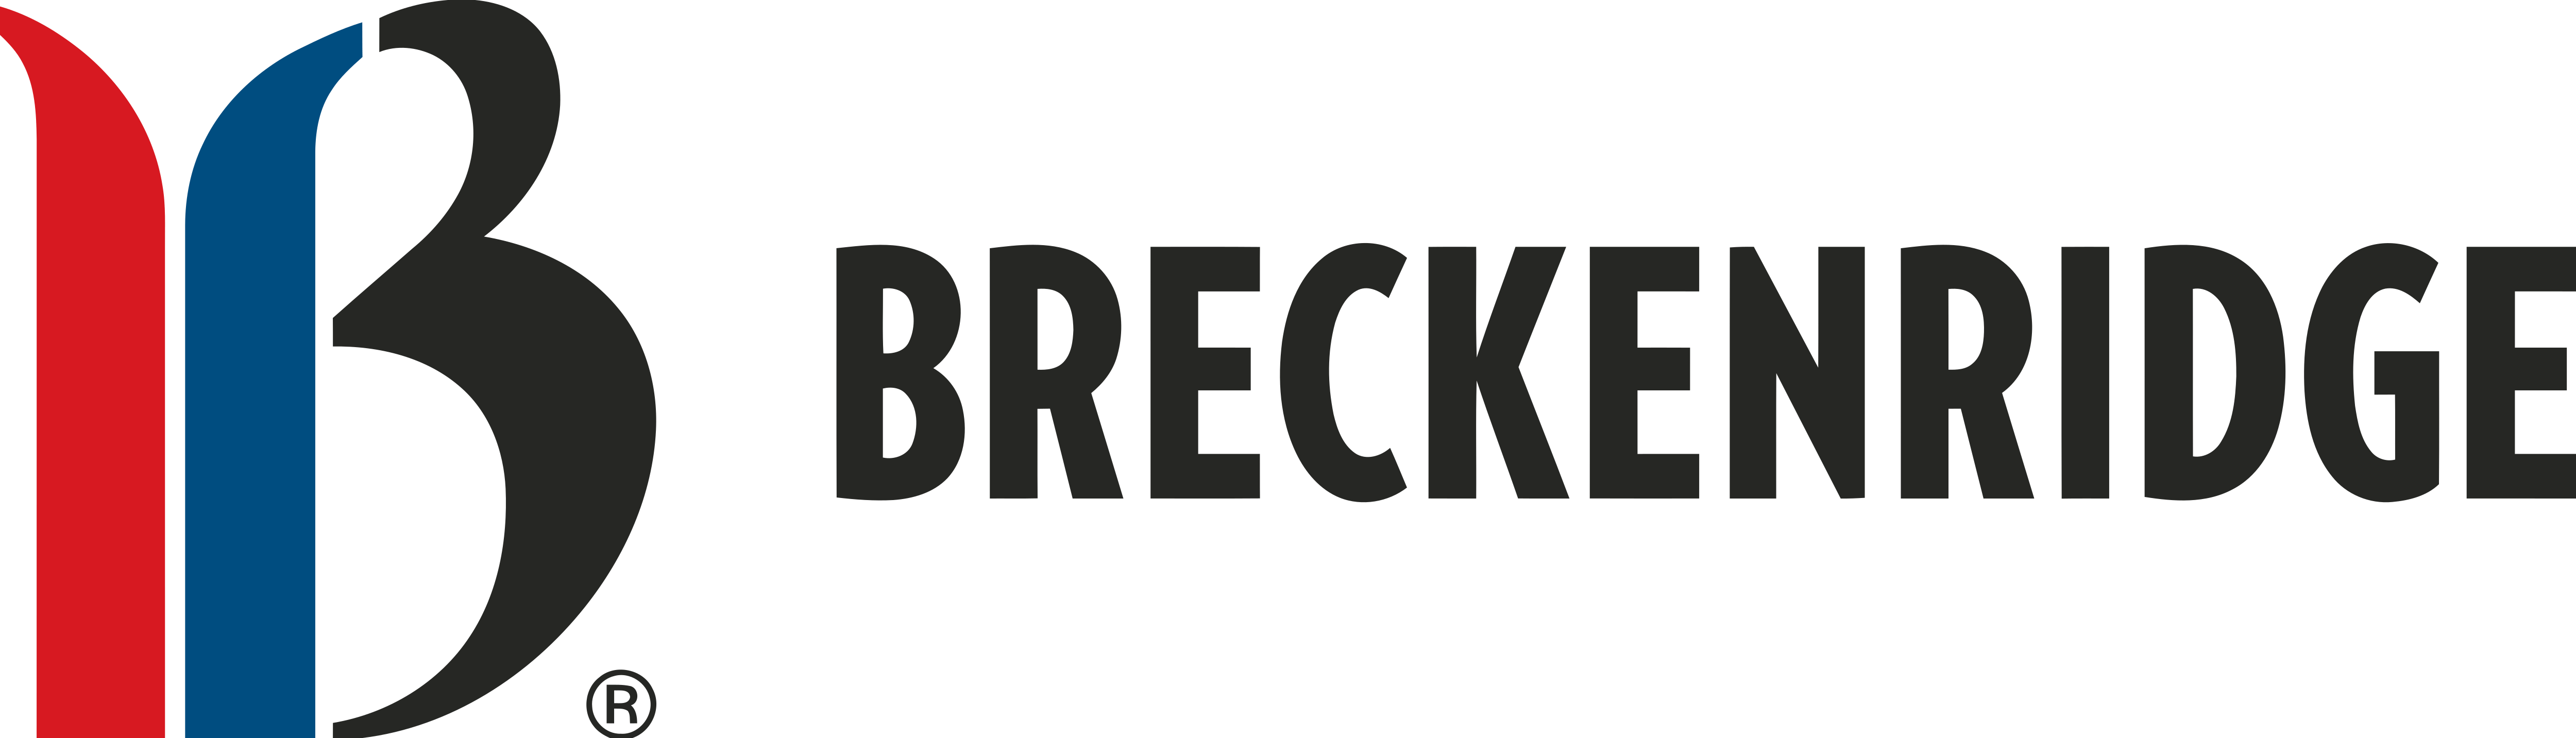 Breckenridge Logo - Breckenridge Ski Resort